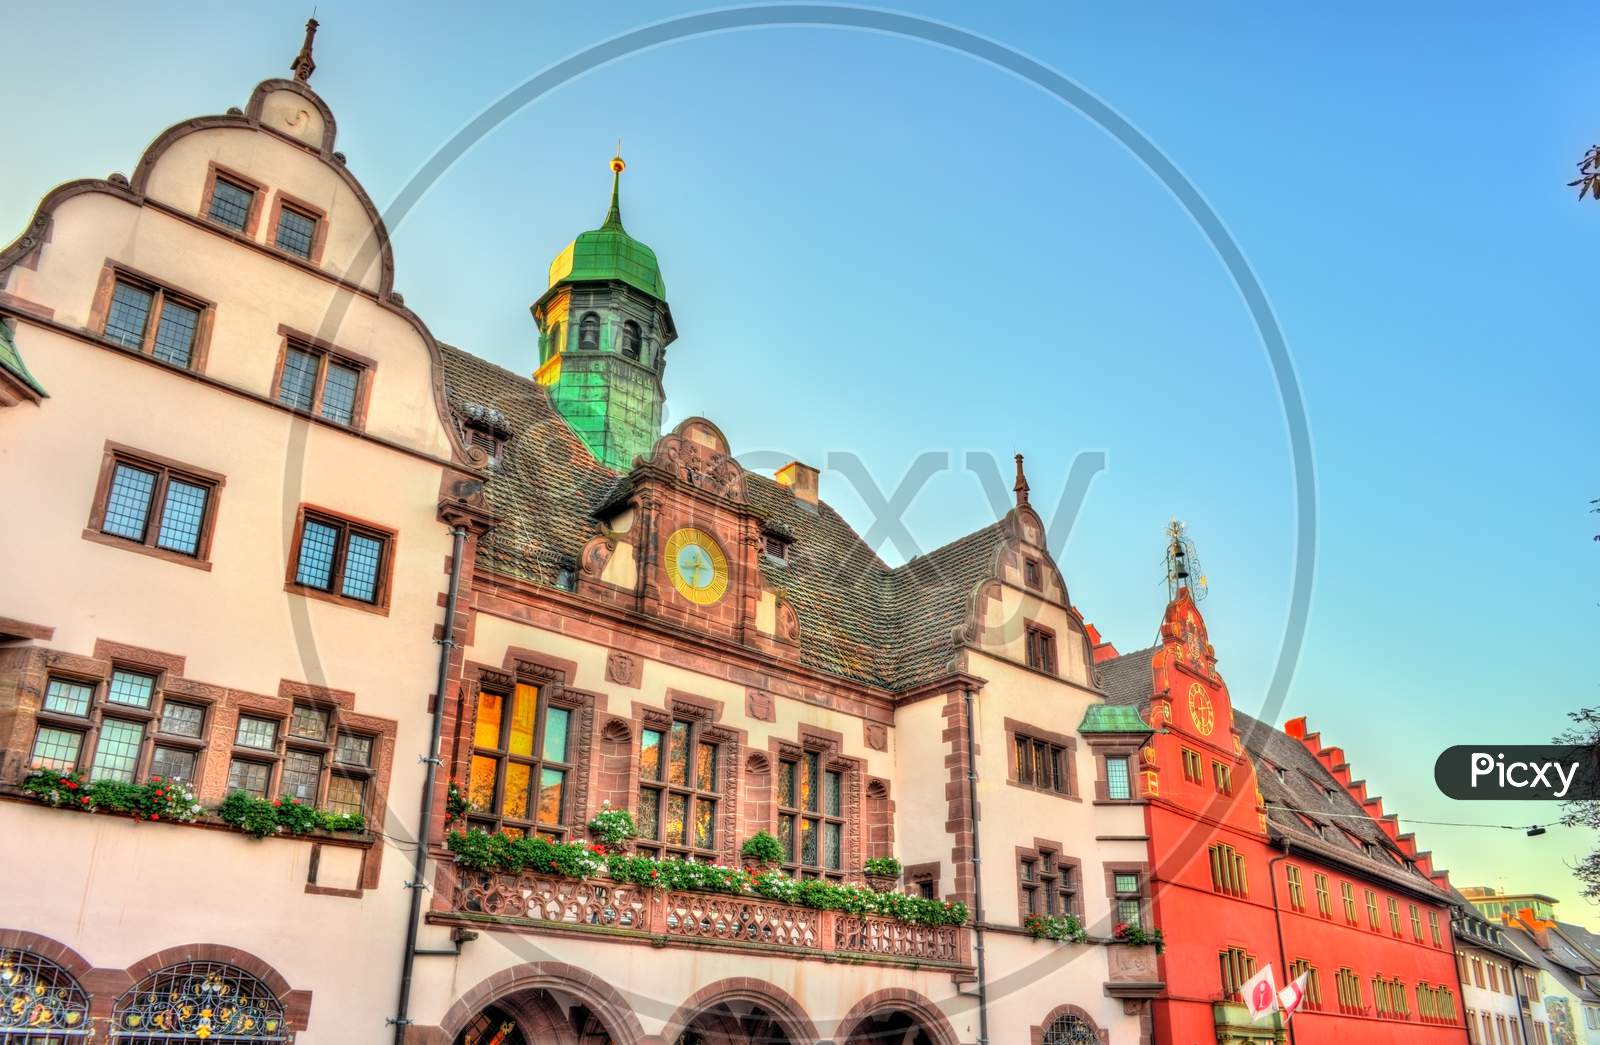 Town Hall Of Freiburg Im Breisgau, Germany